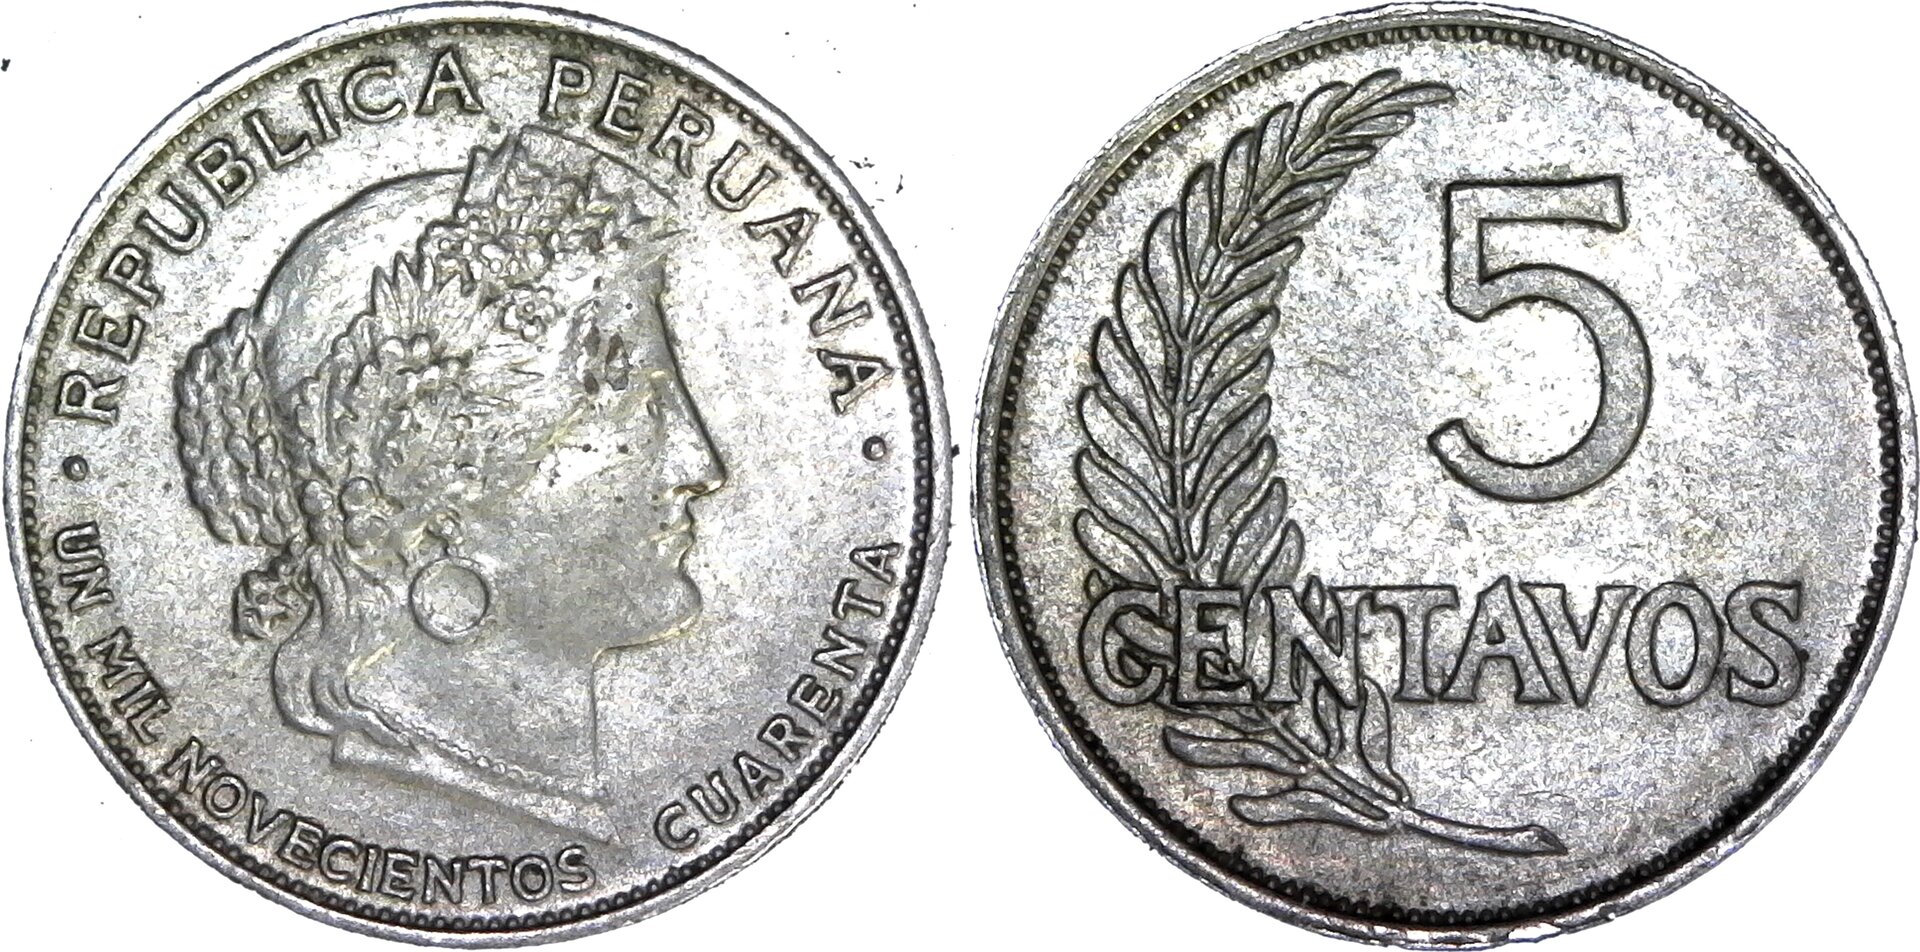 Peru 5 Centavos 1940 obv-side-cutout.jpg